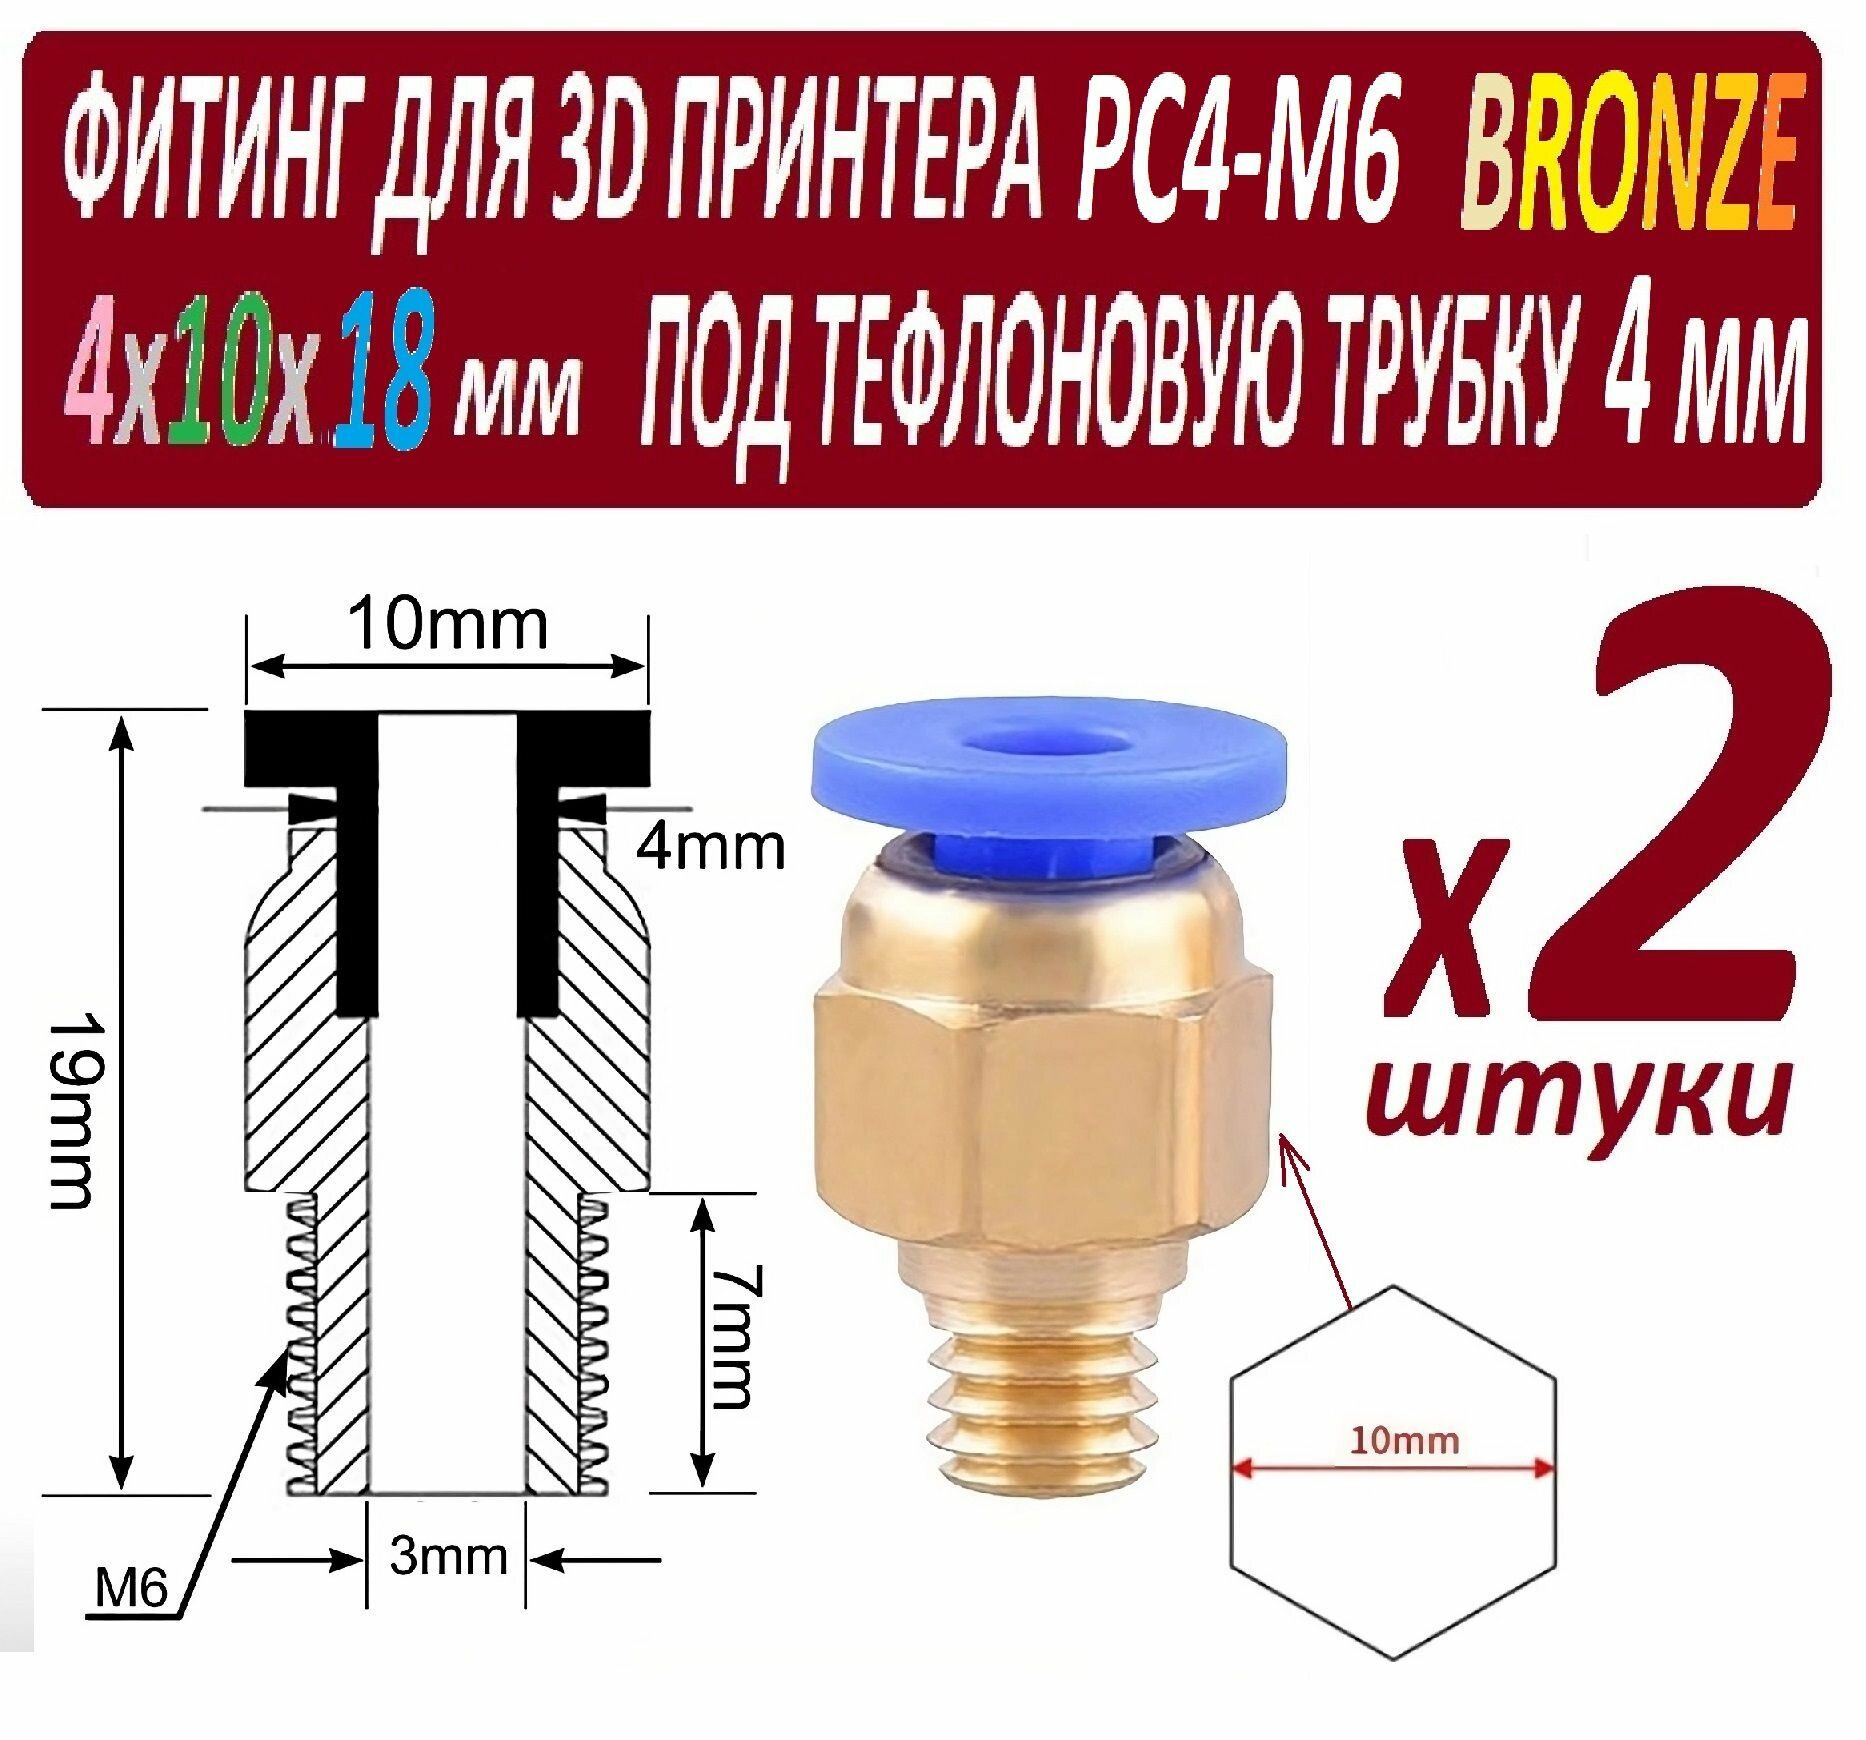 Фитинги PC4-M6 Bronze для 3D принтера под тефлоновую трубку 2х4 мм - 2 штуки